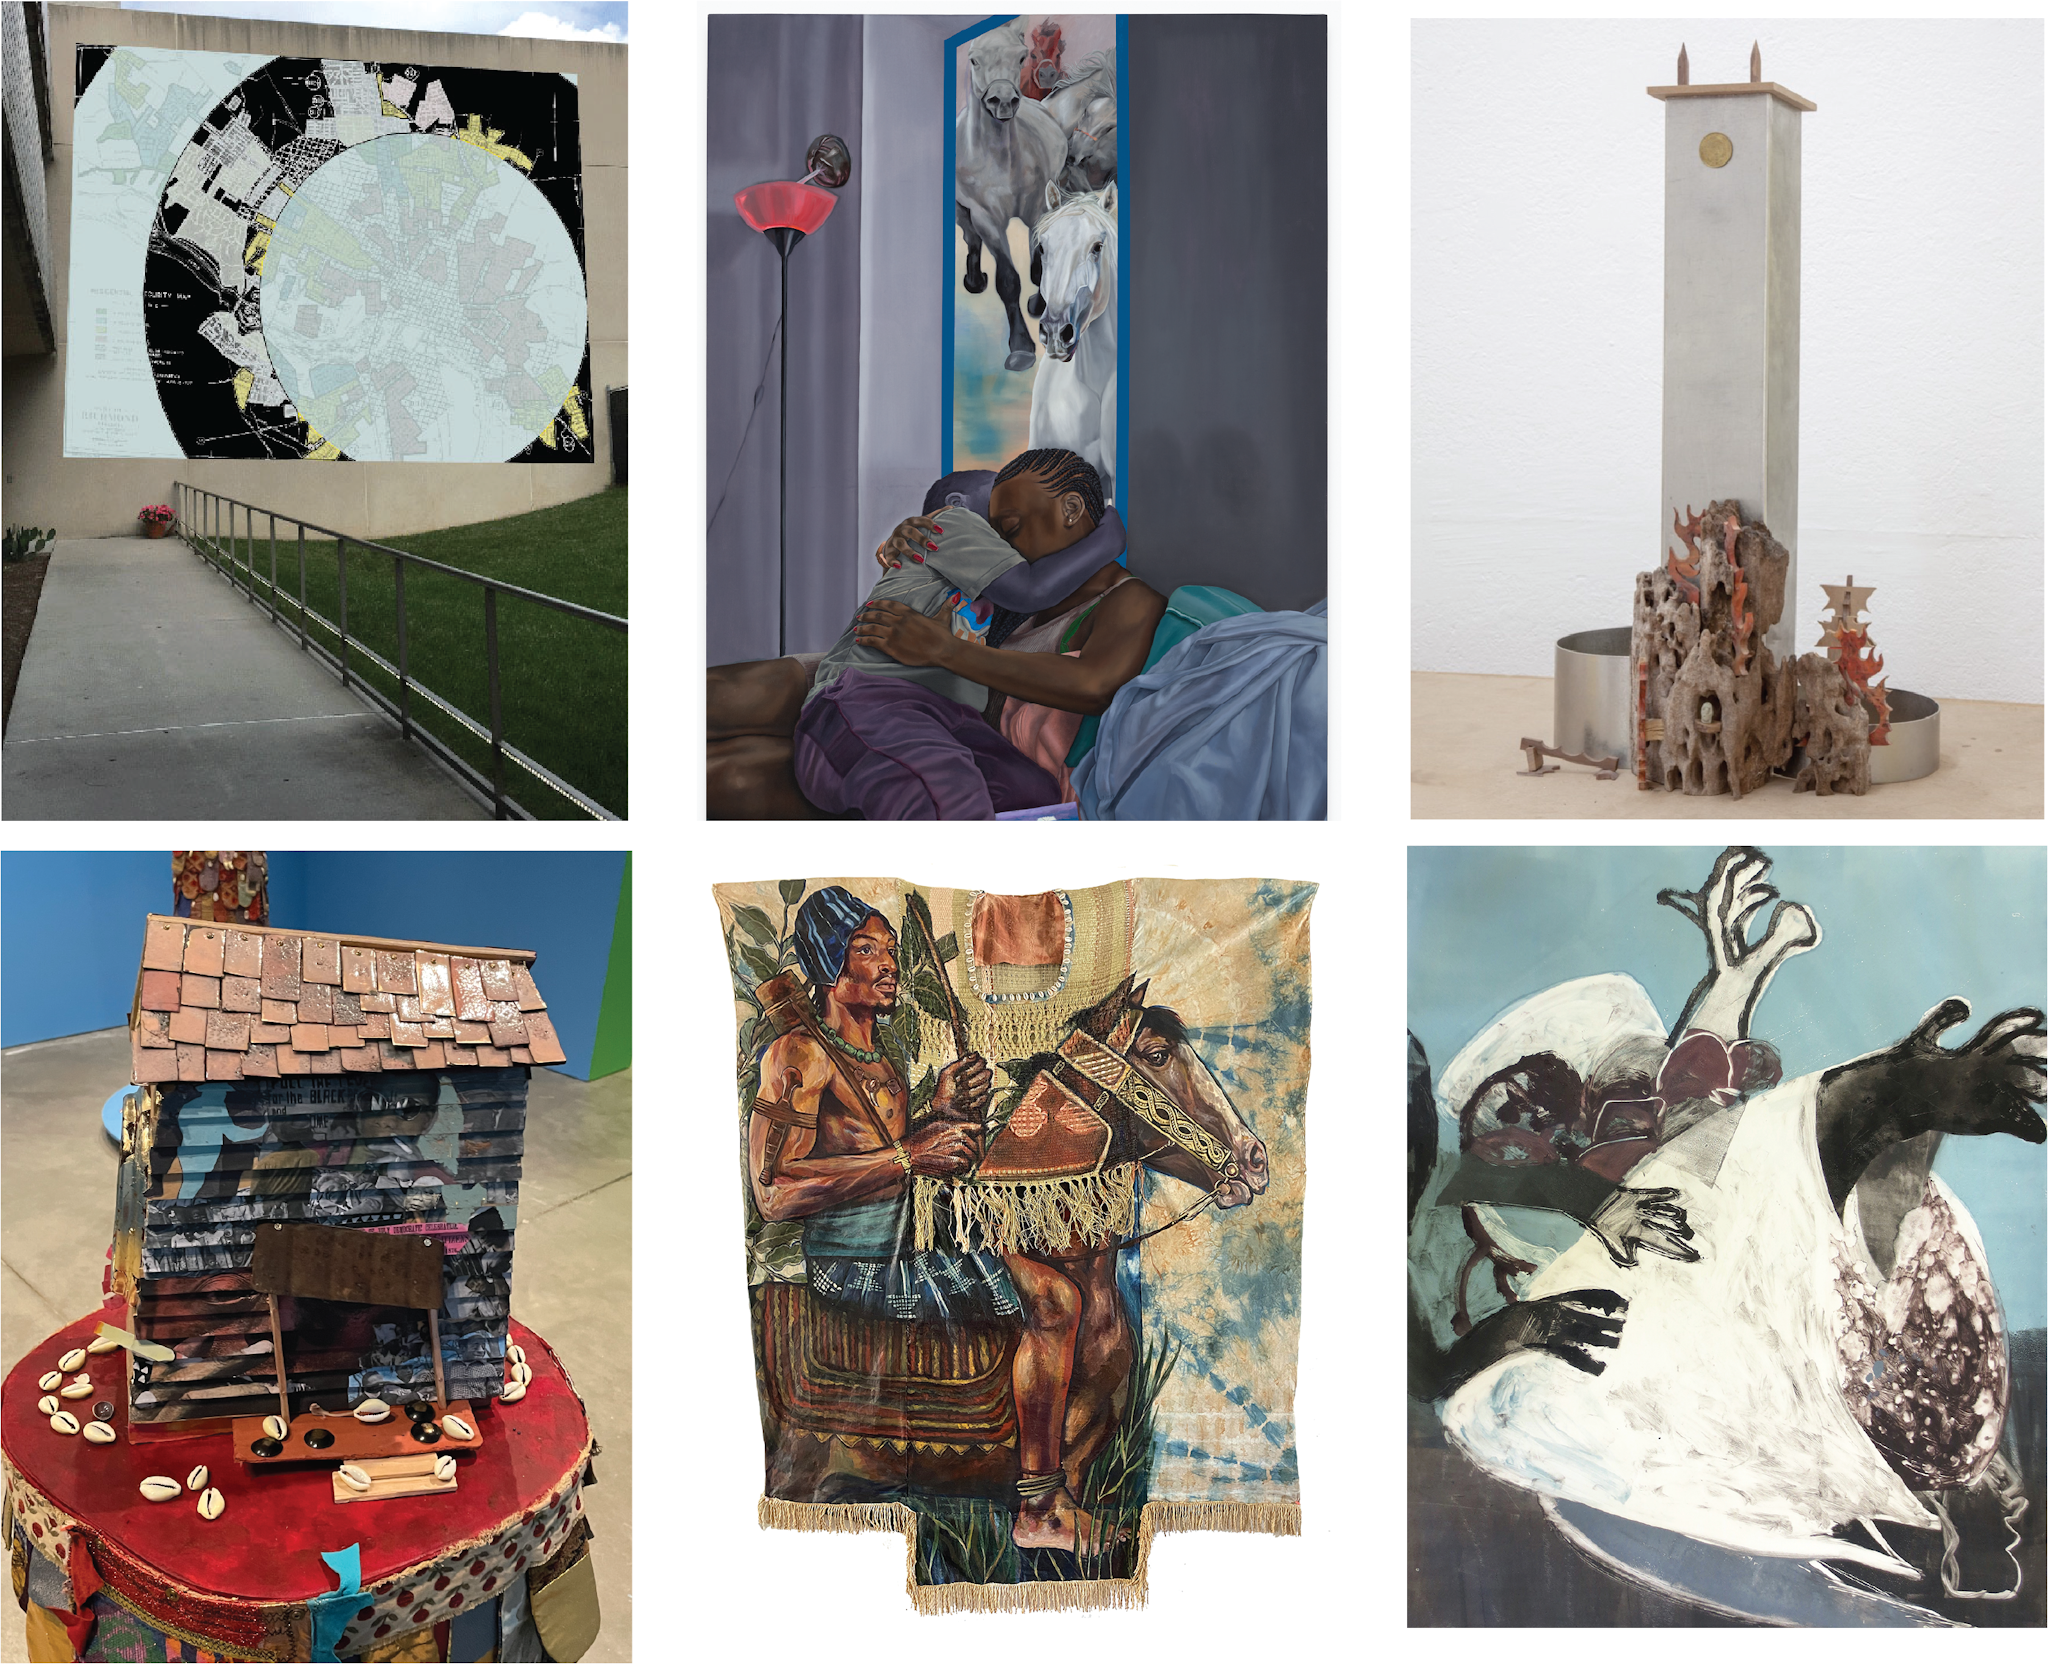 Six works from Boston area artist finalists.